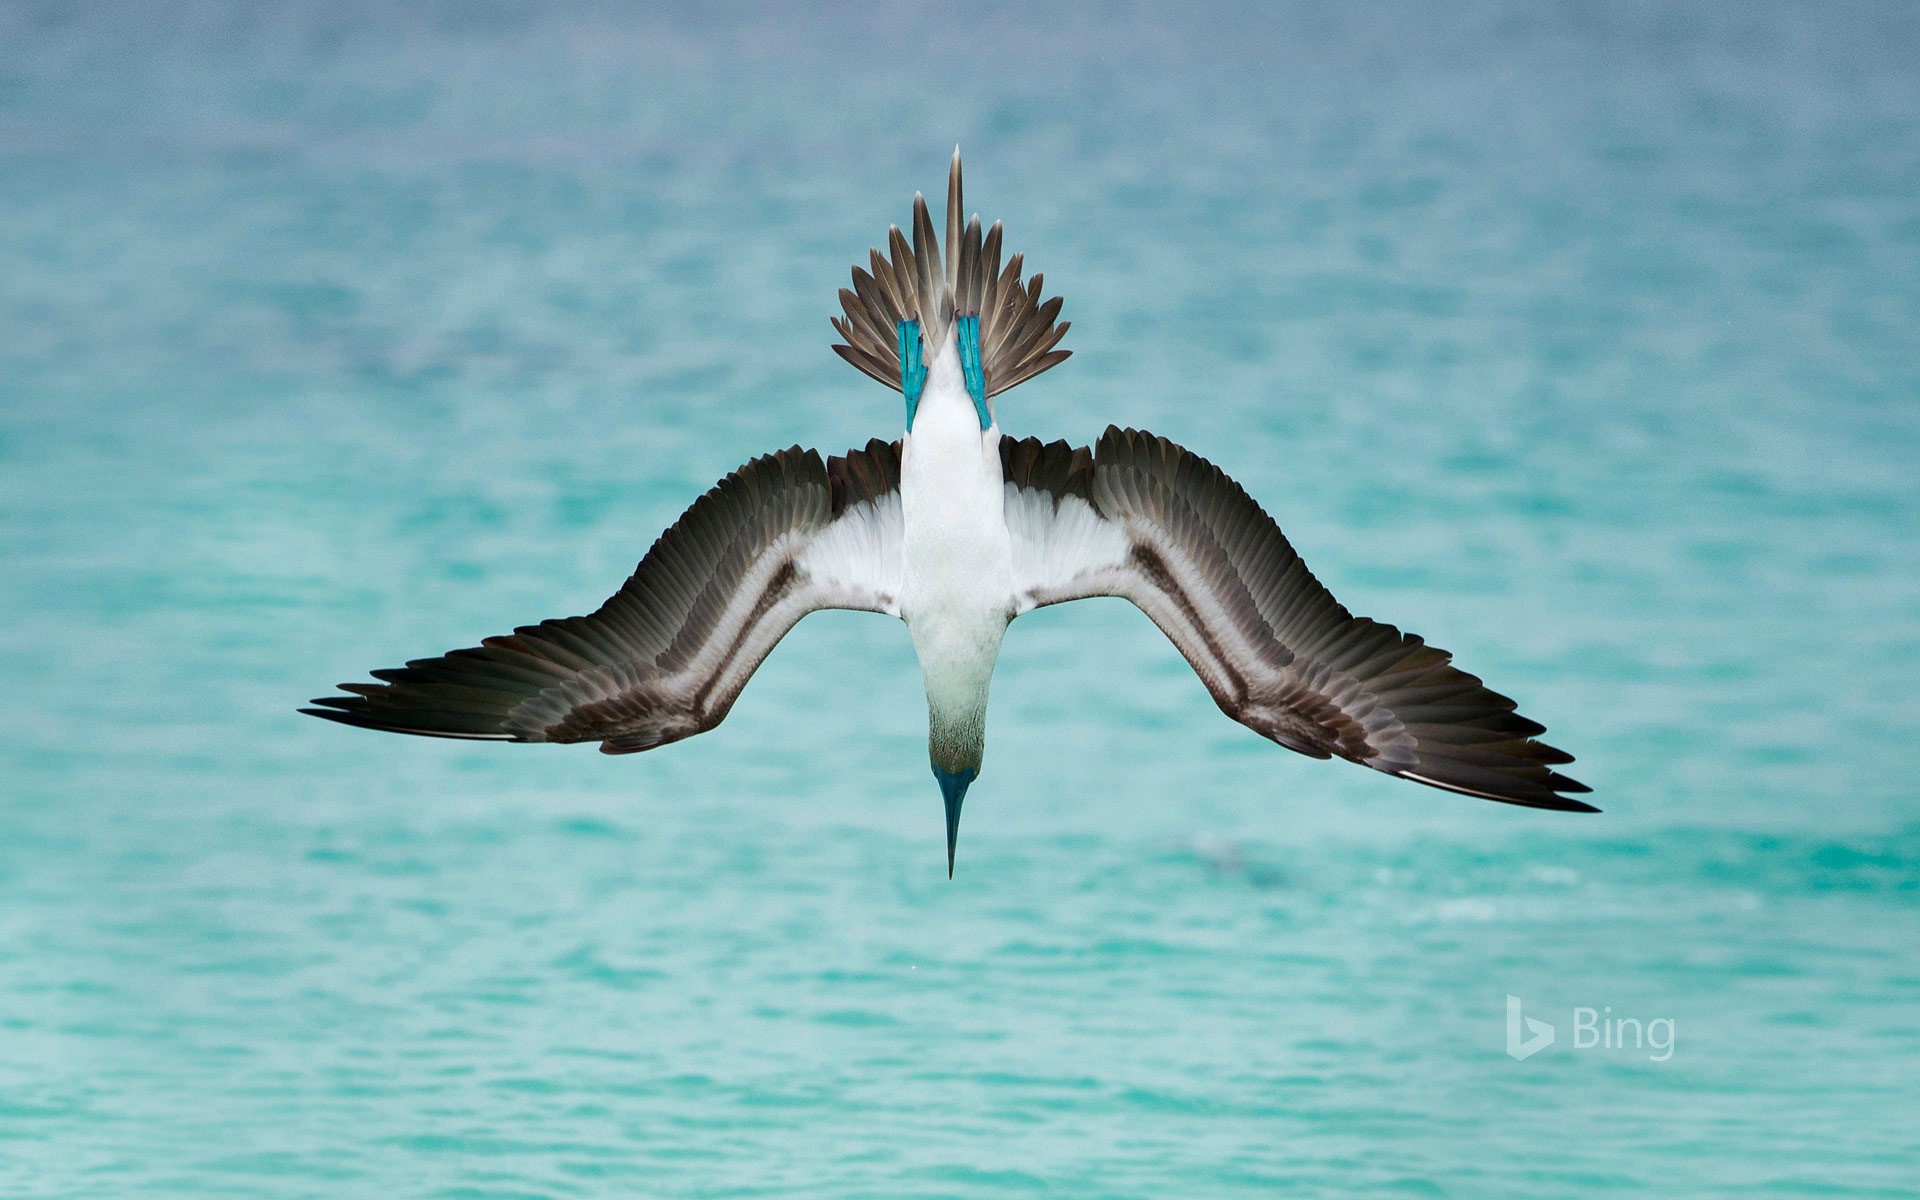 A blue-footed booby dives off San Cristóbal Island, Ecuador